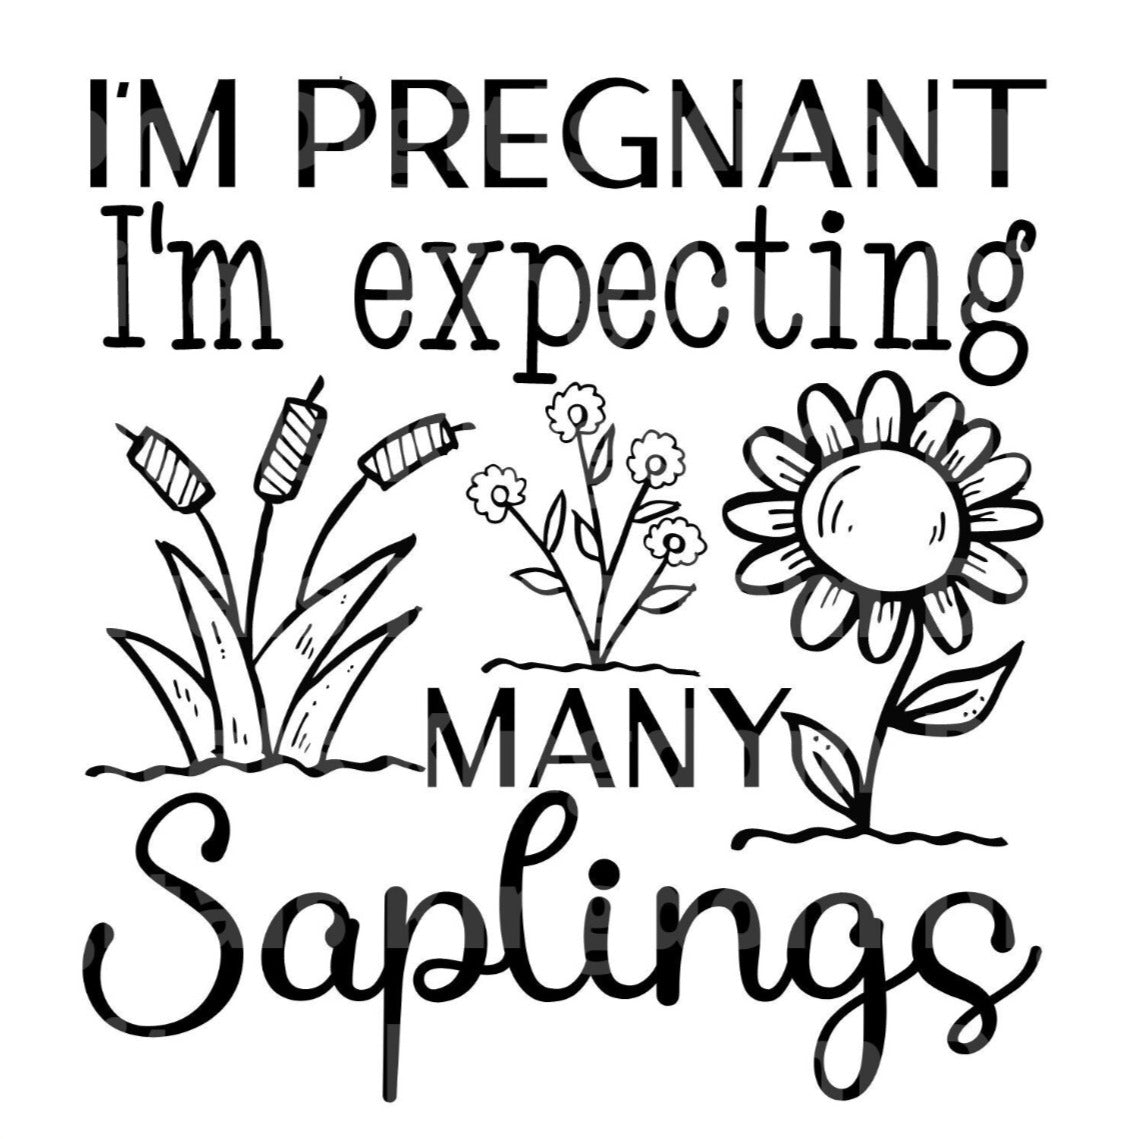 Im pregnant im expecting many saplings SVG Cut File